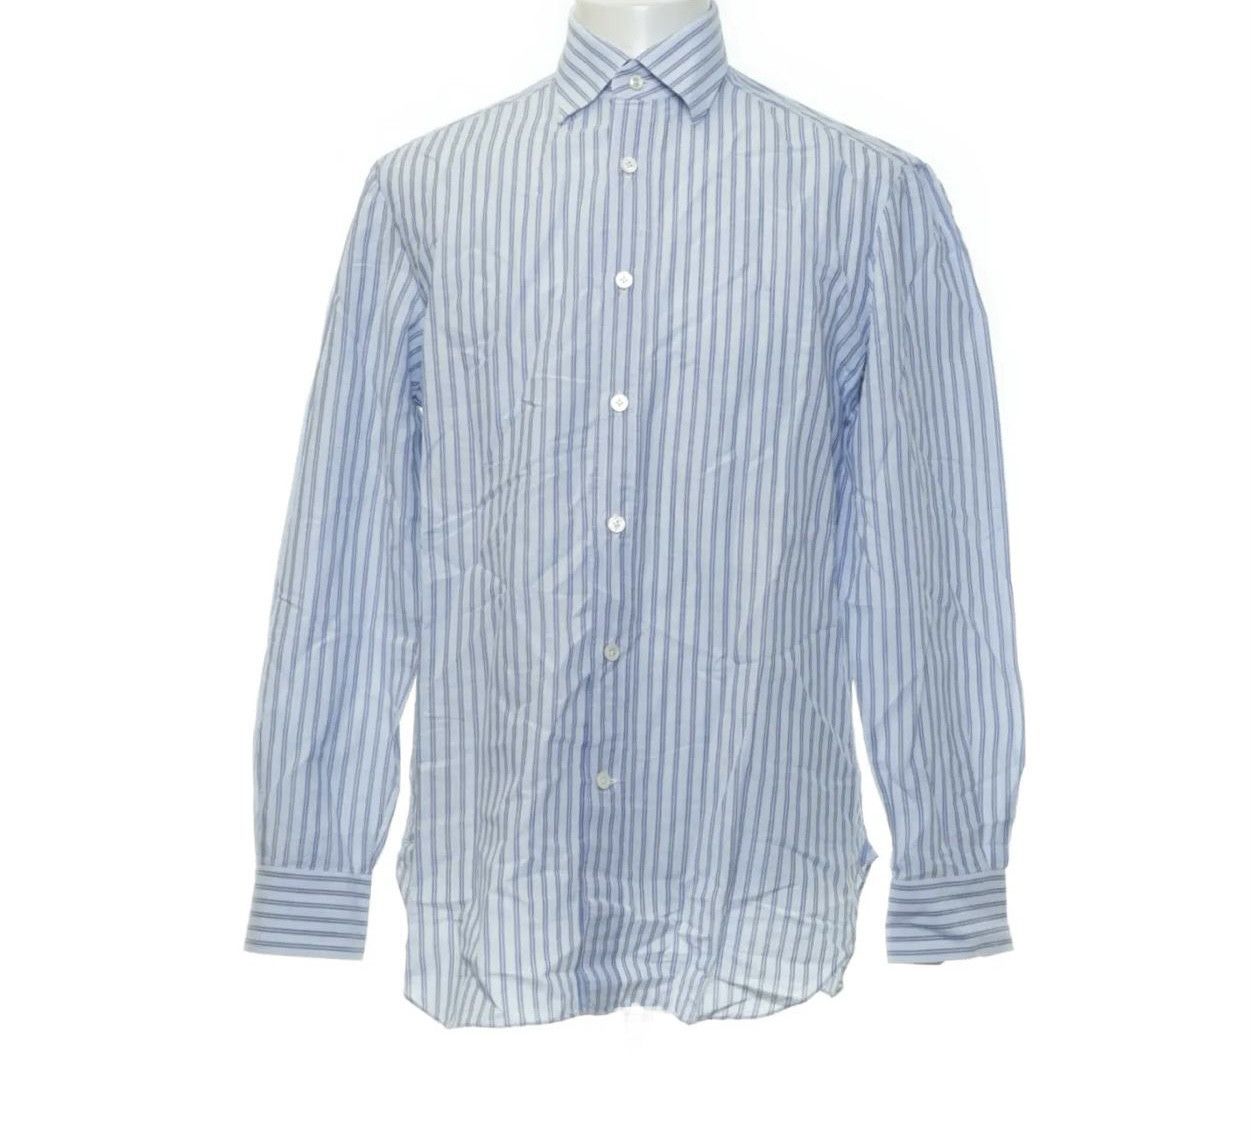 Kiton Kiton Napoli 1/1 luxury shirt size L made in Italy | Grailed